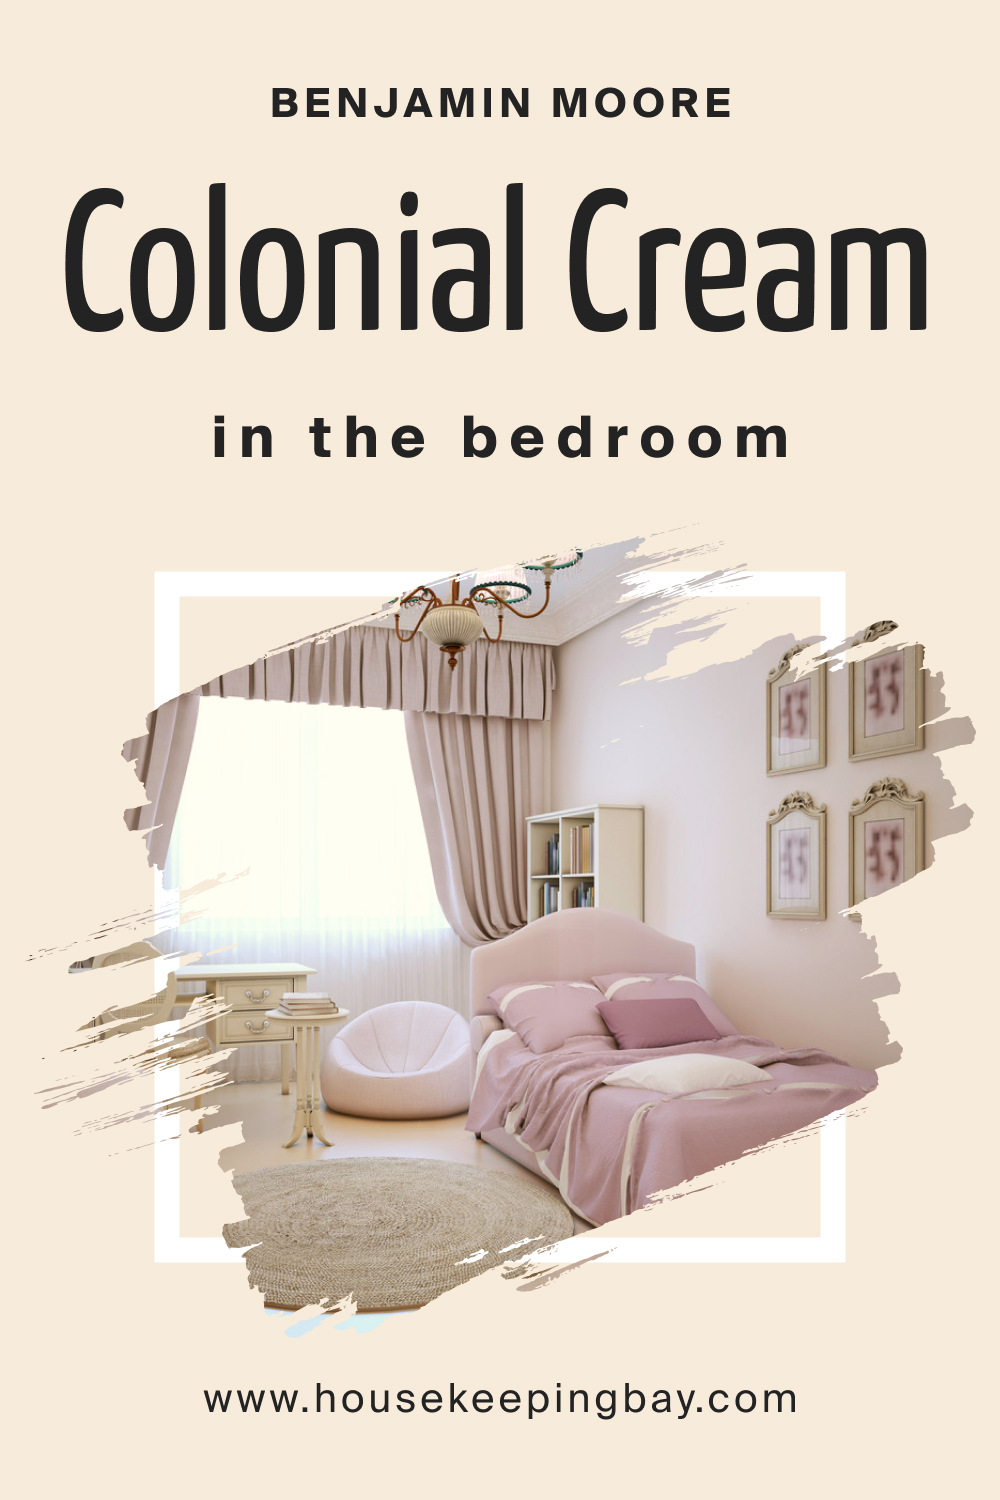 Benjamin Moore. Colonial Cream OC 77 for the Bedroom